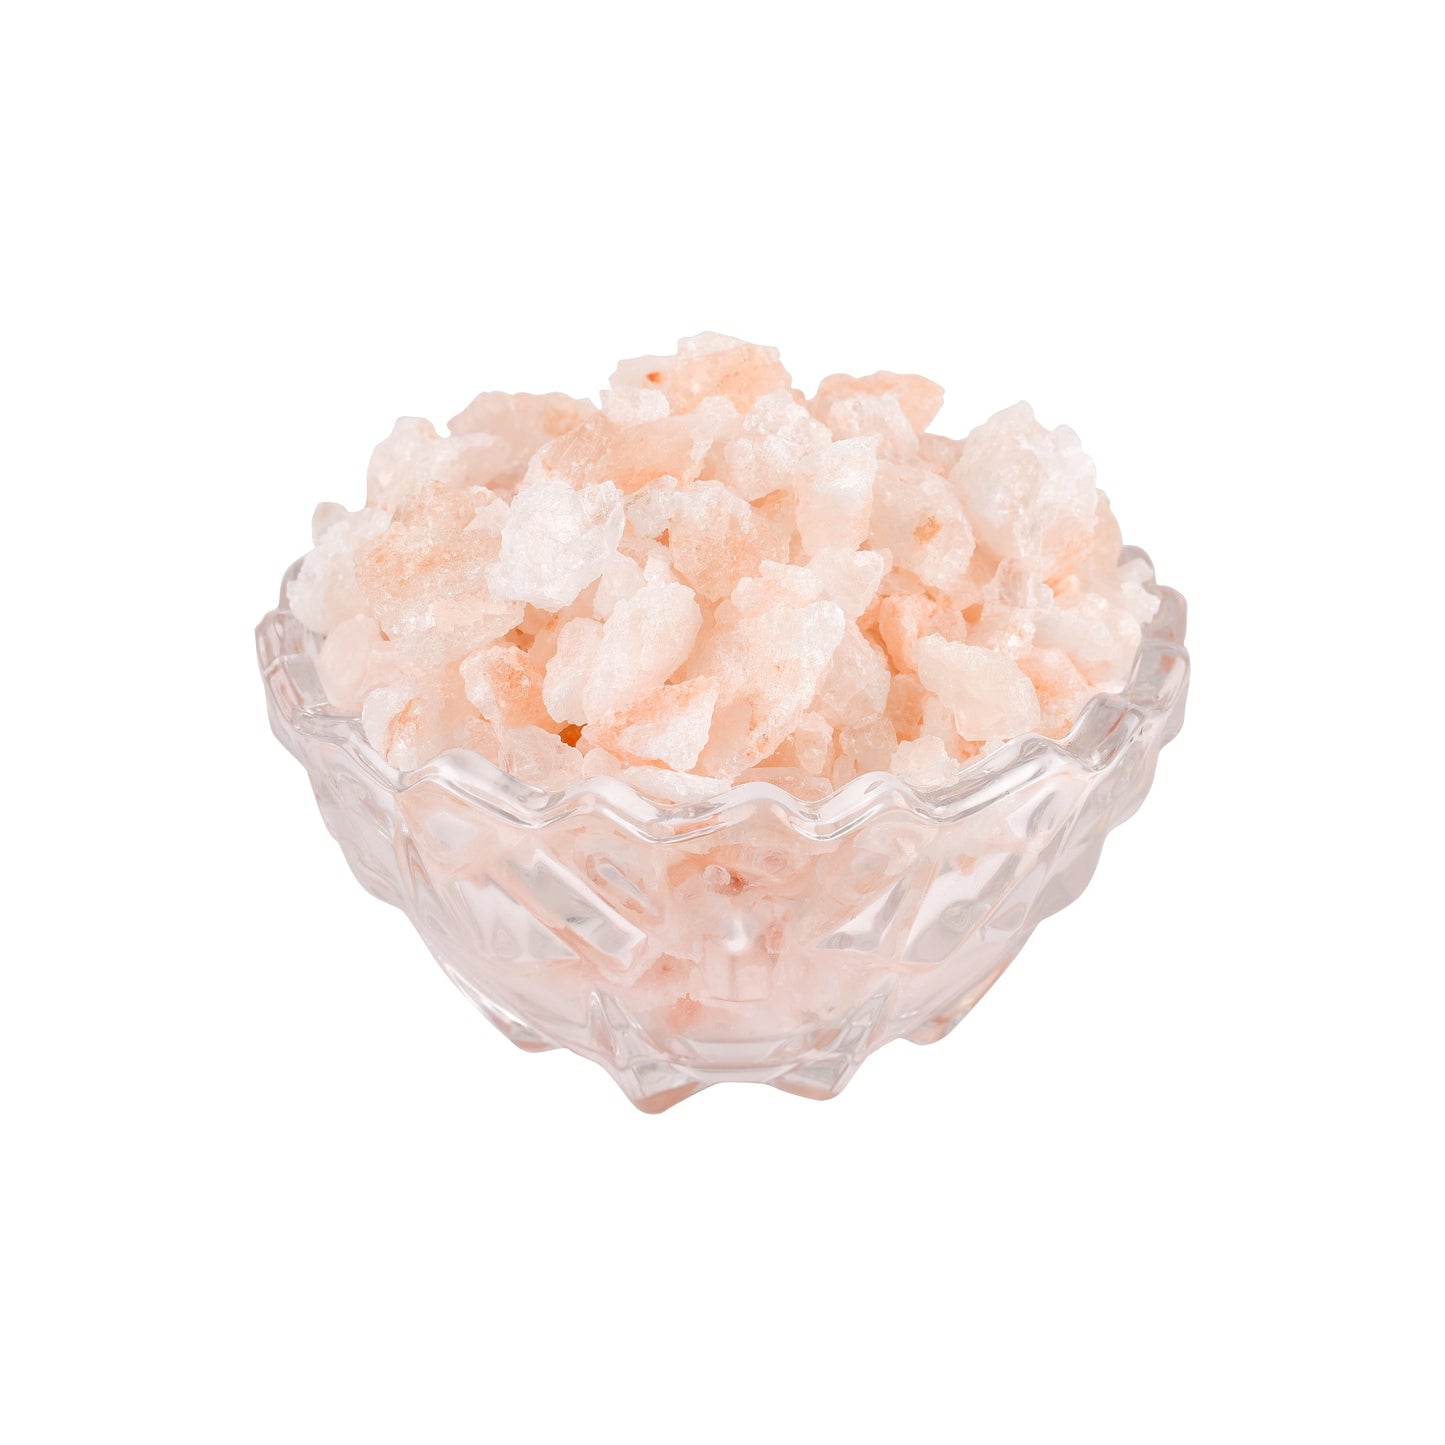 Himalayan Pink Crystals Salt | Pack of 1KG